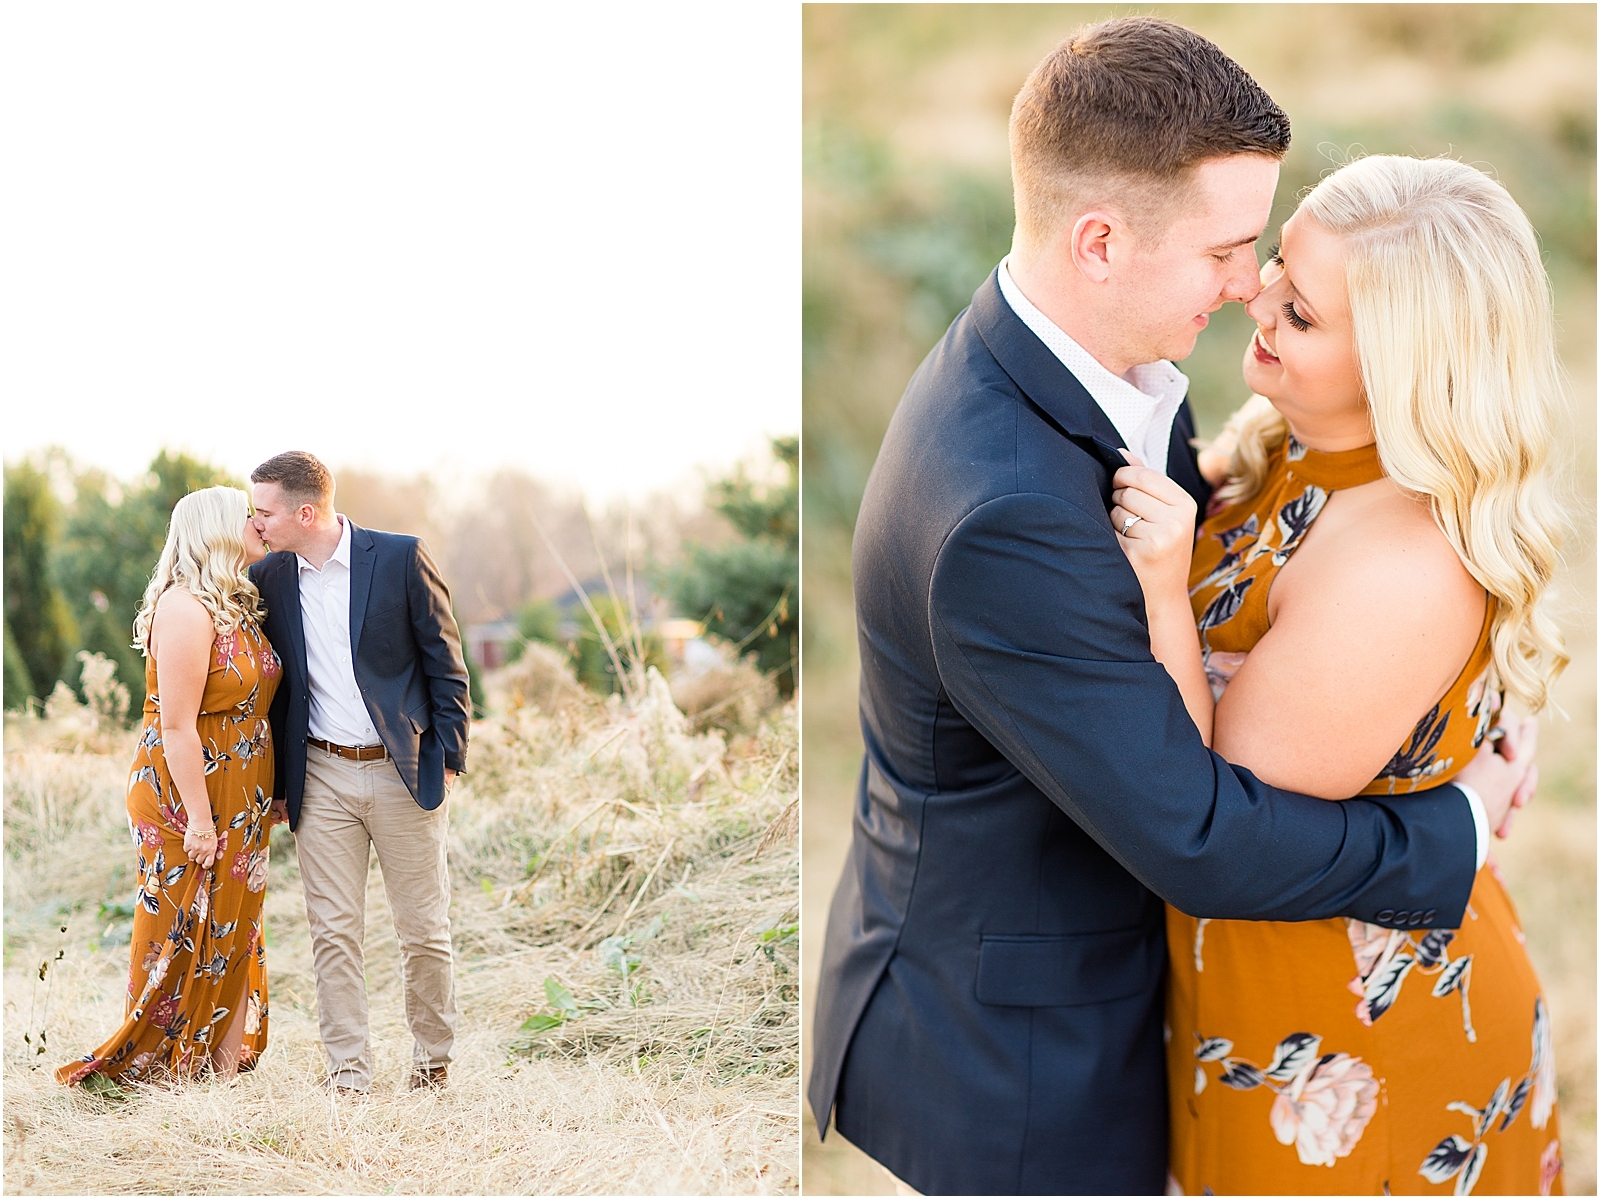 Haylee and Dillon | Evansville Wedding Photographer0018.jpg